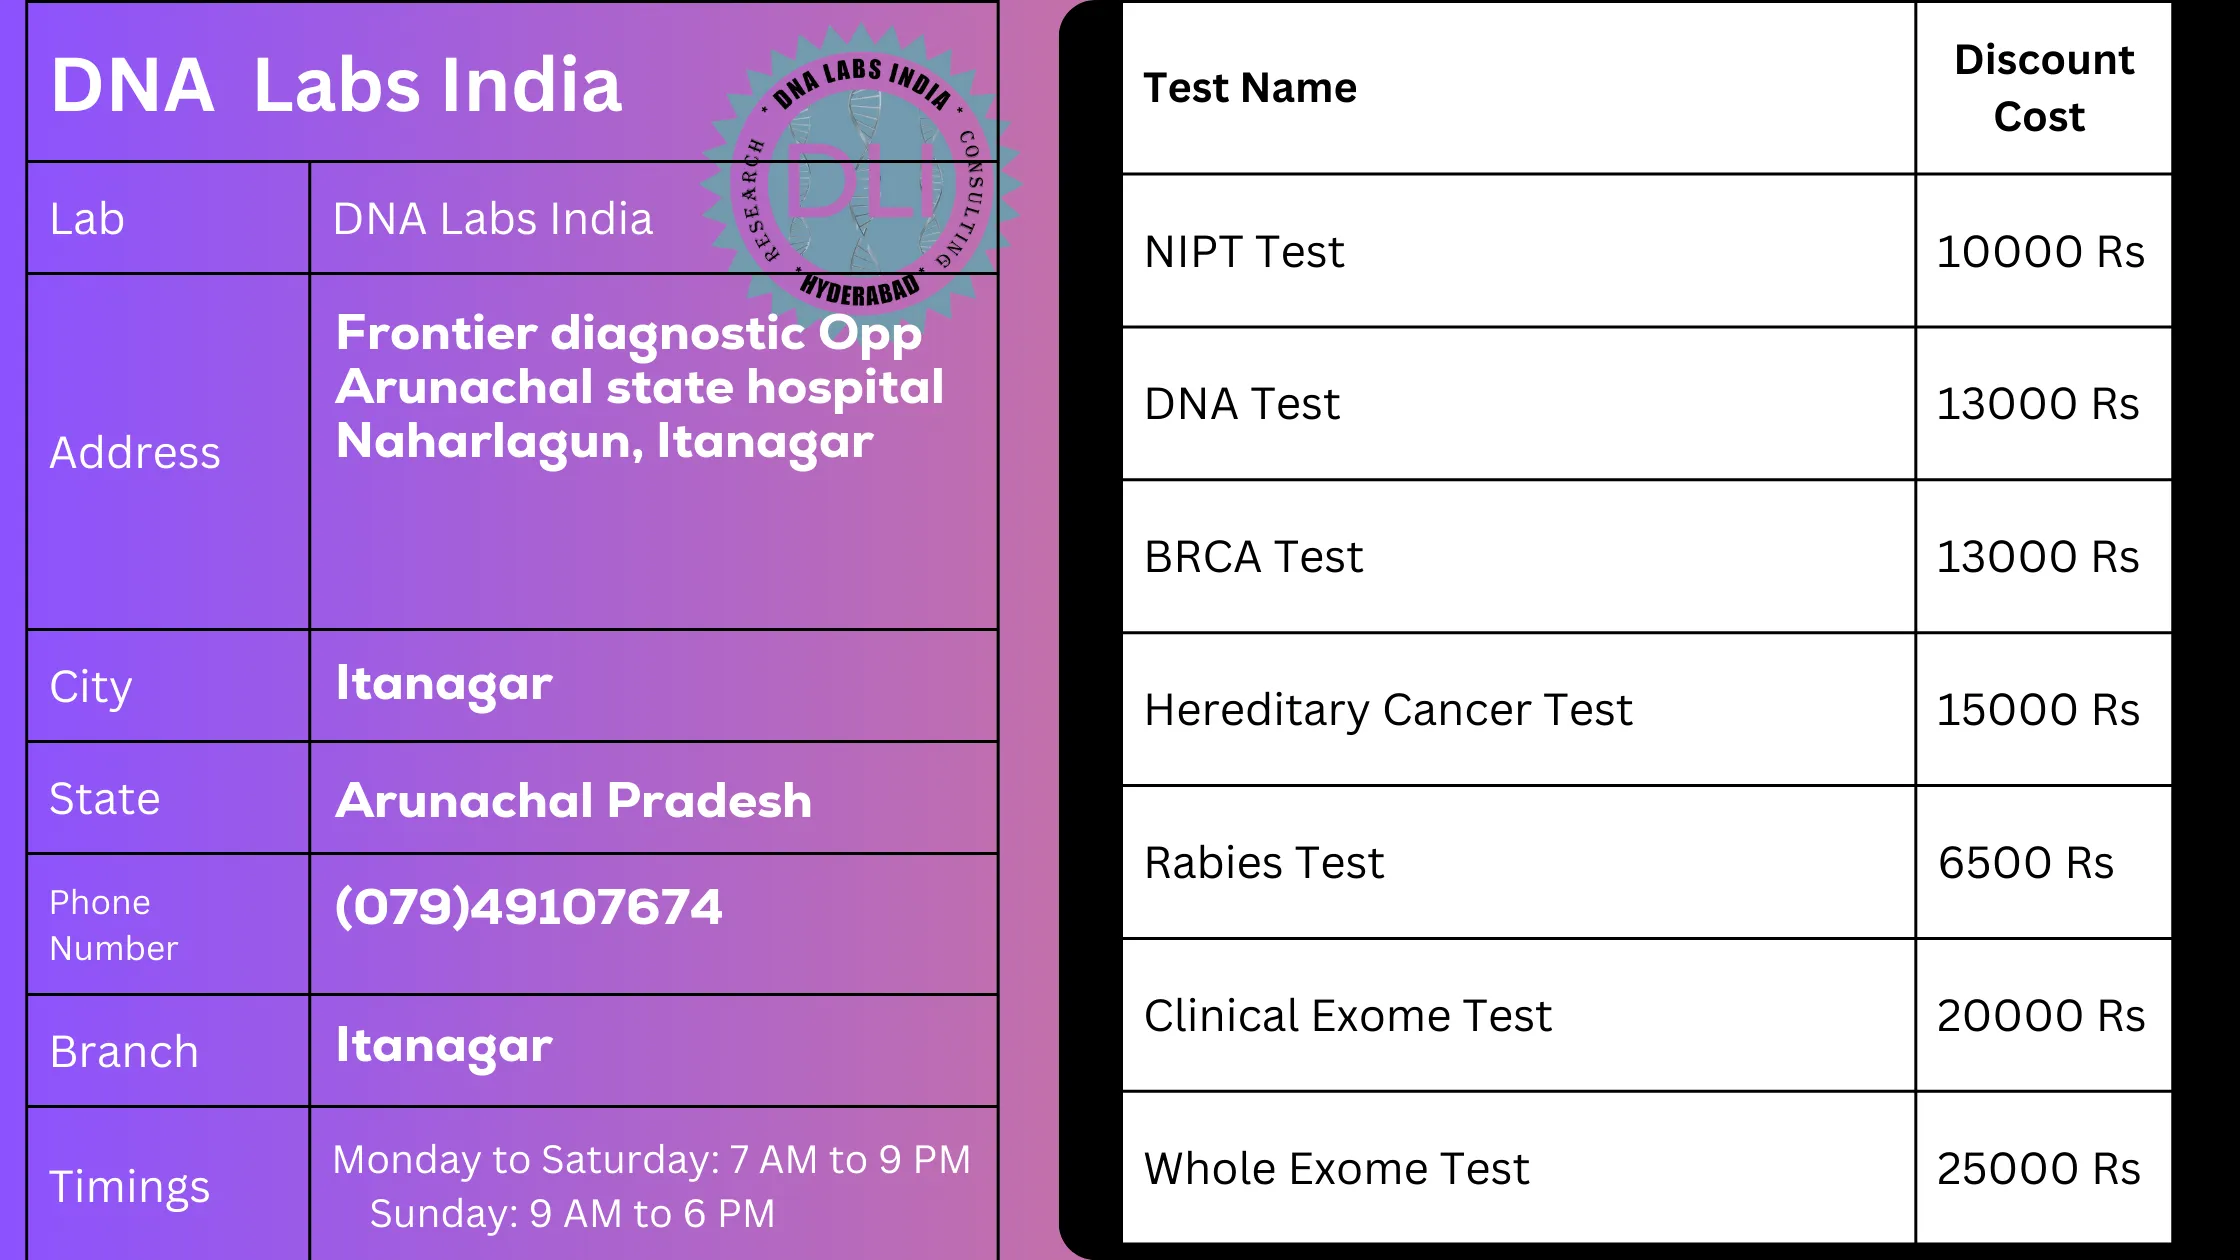 DNA Labs India in Itanagar - Get 20% Off on Testsn